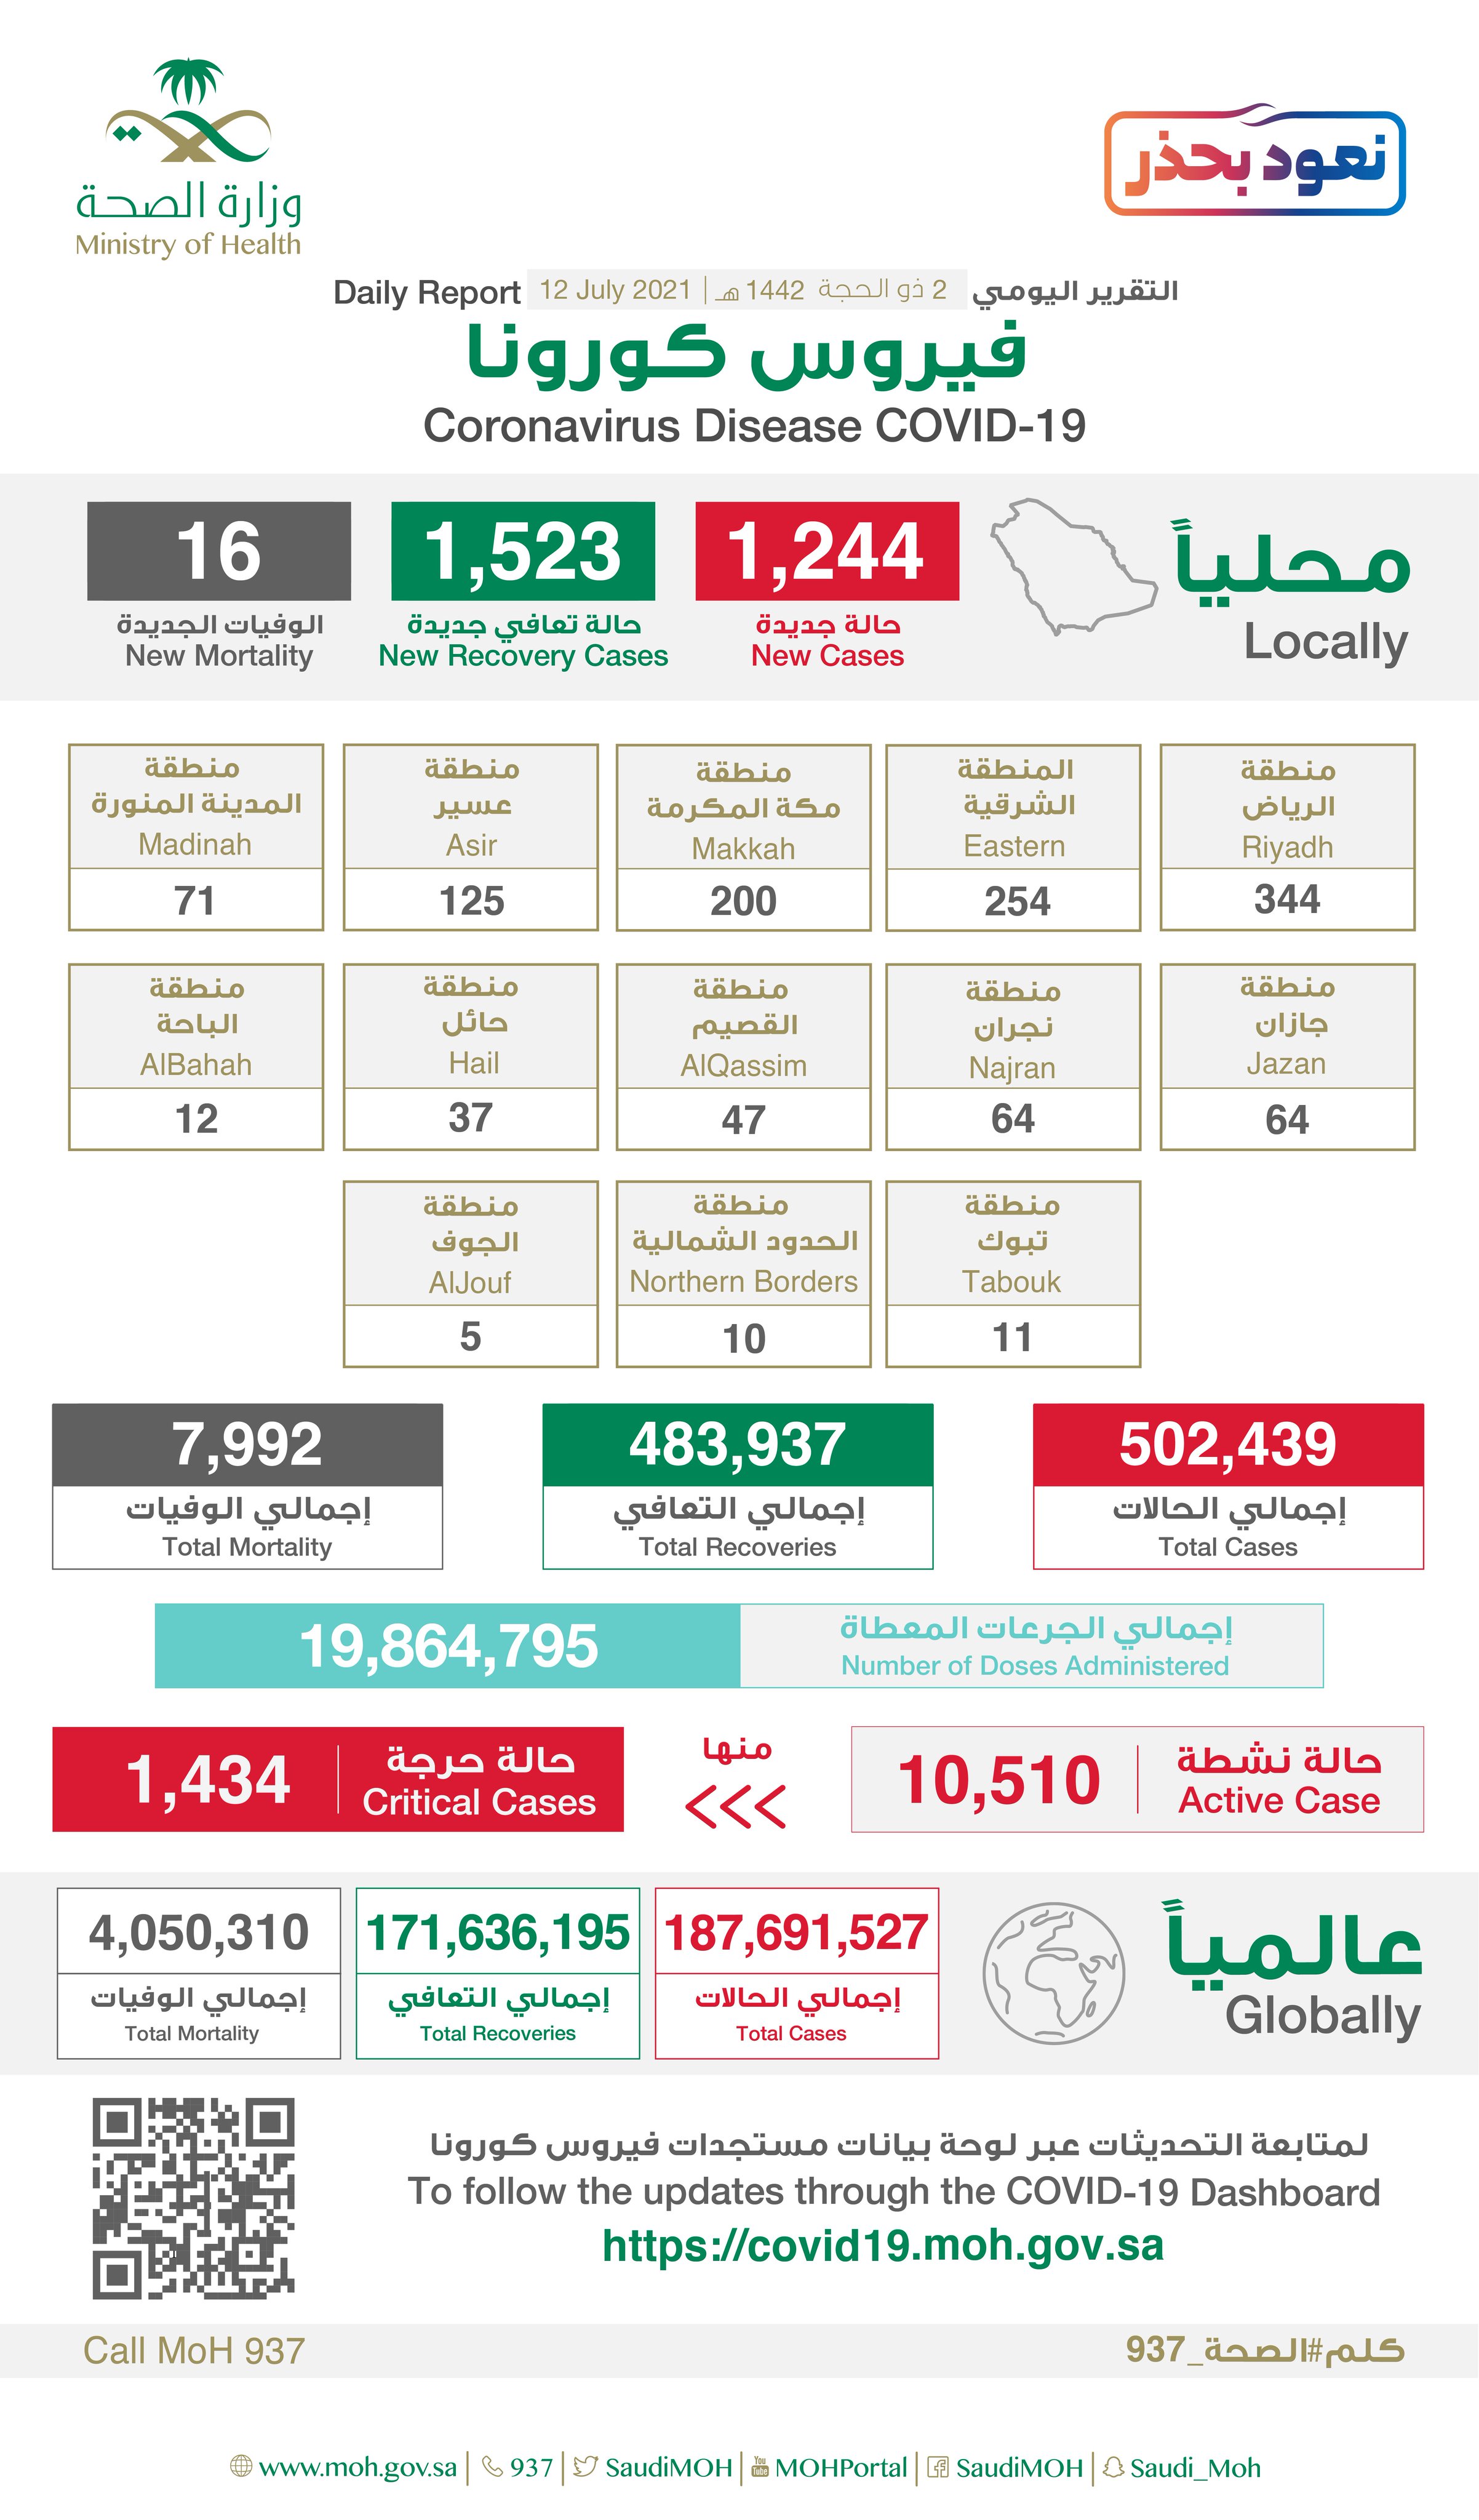 Saudi Arabia Coronavirus : Total Cases : 502,439 , New Cases :1,244, Cured : 483,937 , Deaths: 7,992, Active Cases : 10,510